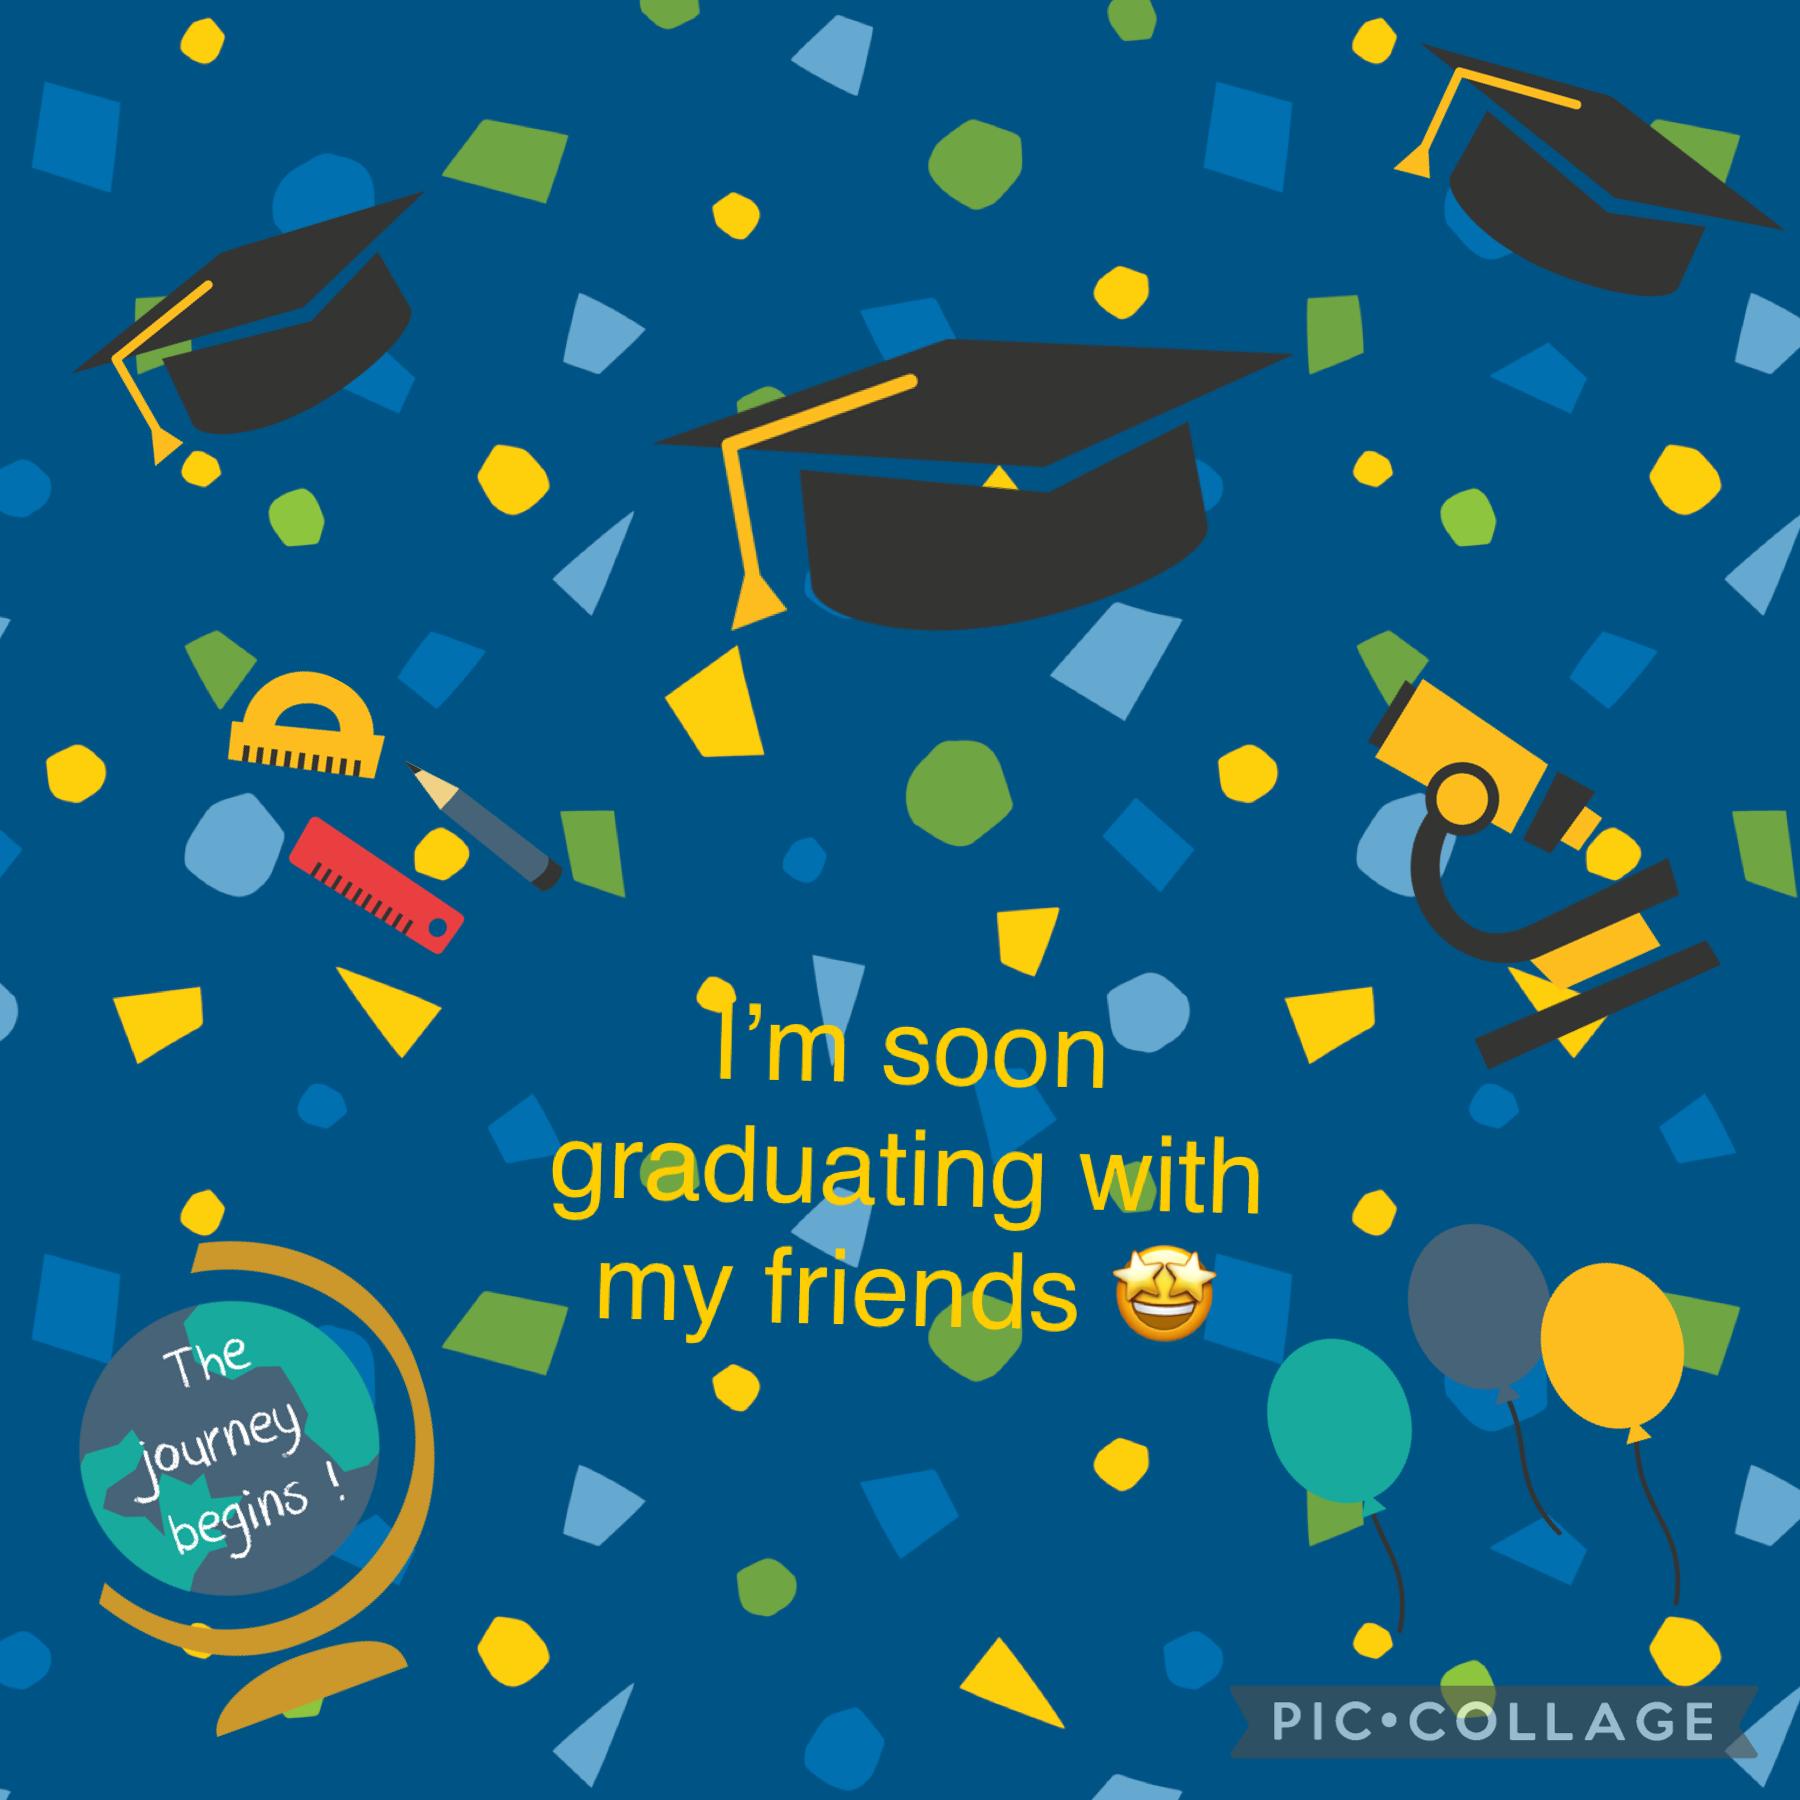 I’m soon graduating like in 3 weeks!!!